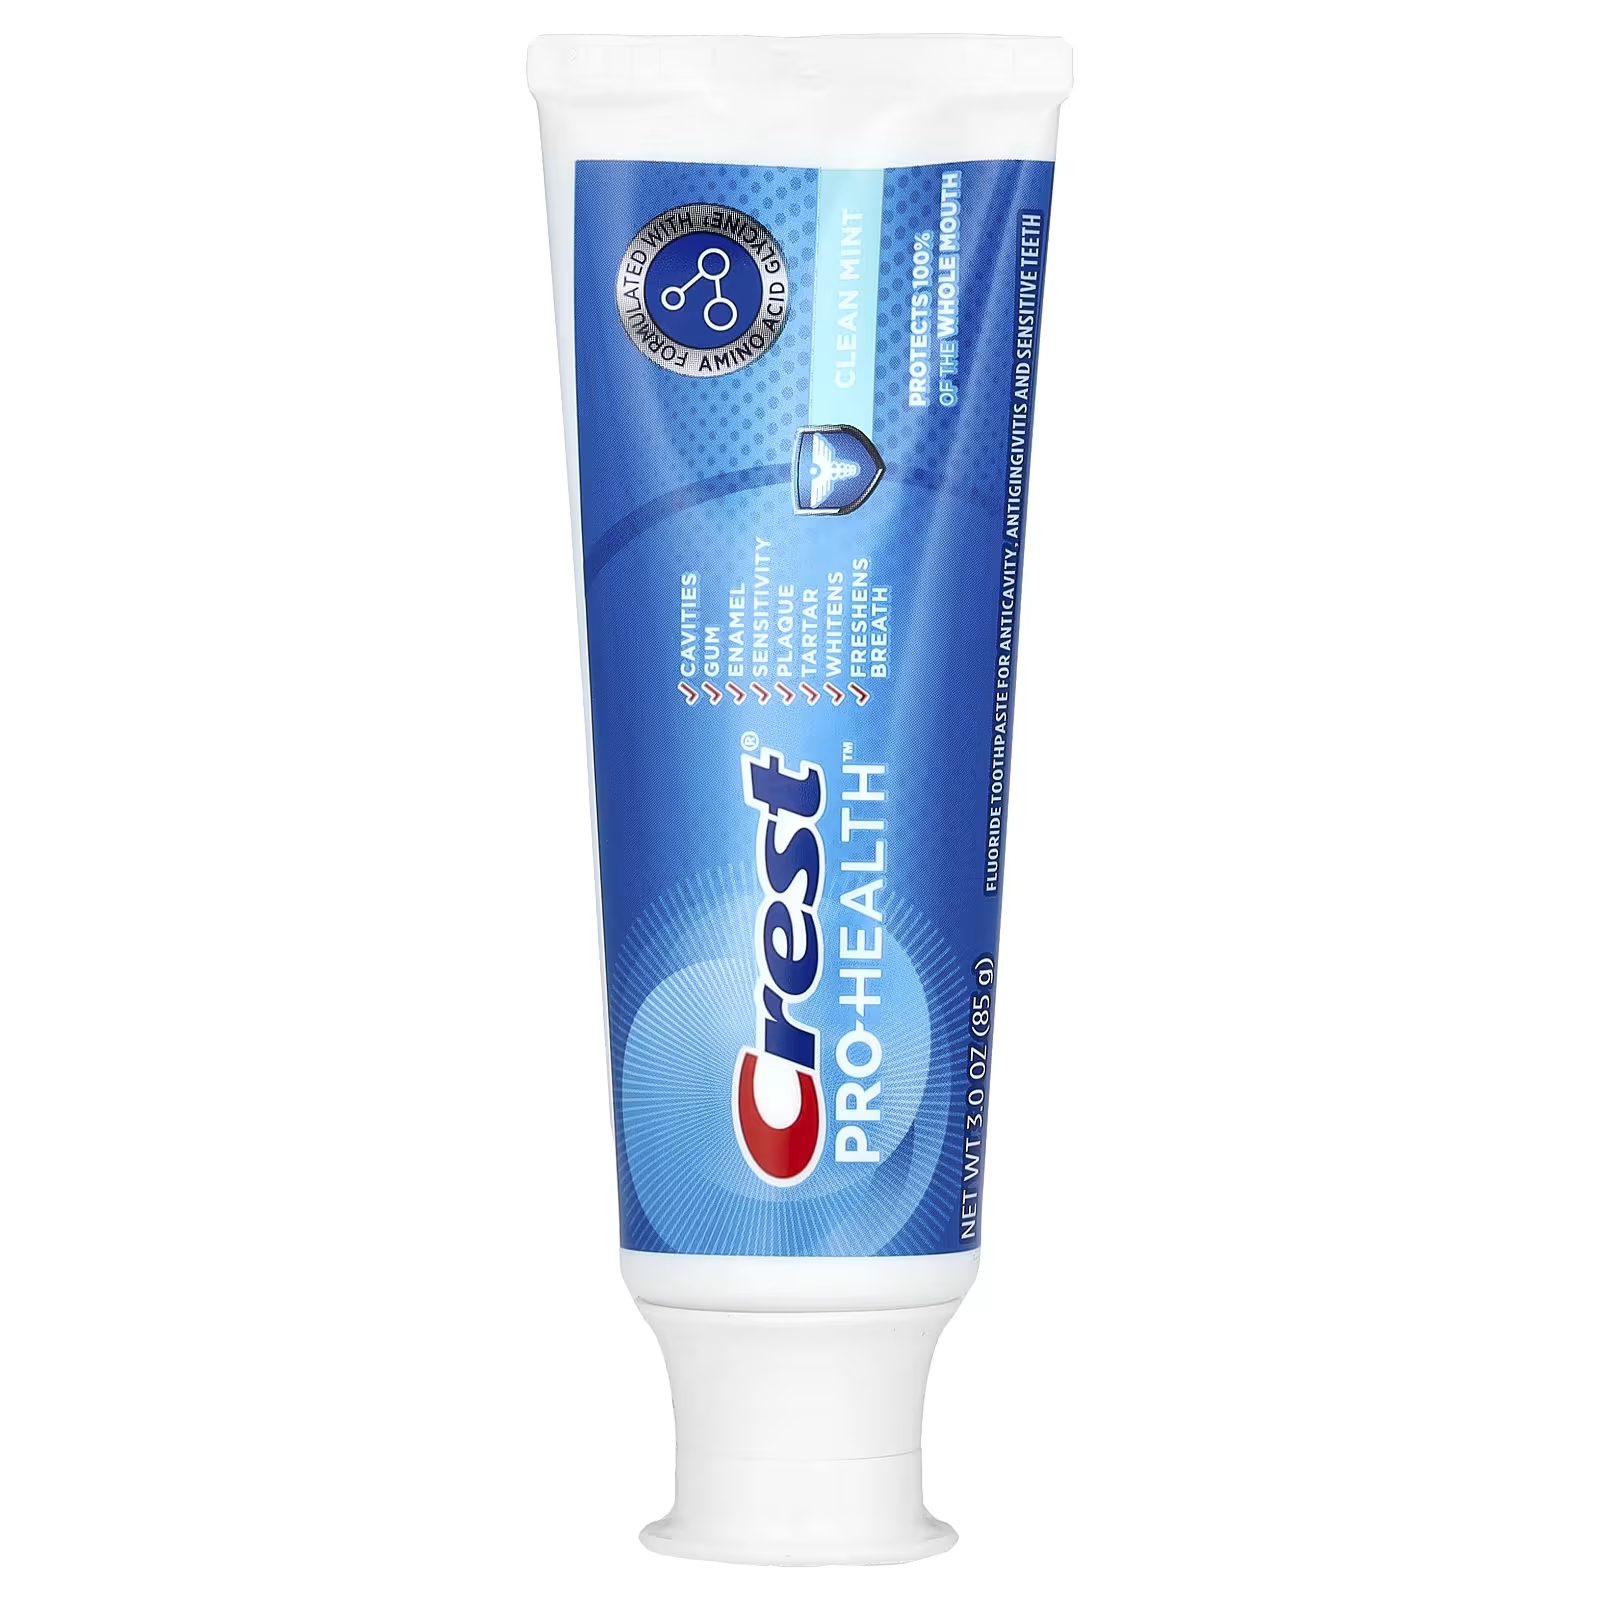 Зубная паста с фтором Crest Pro-Health чистая мята, 85 г цена и фото